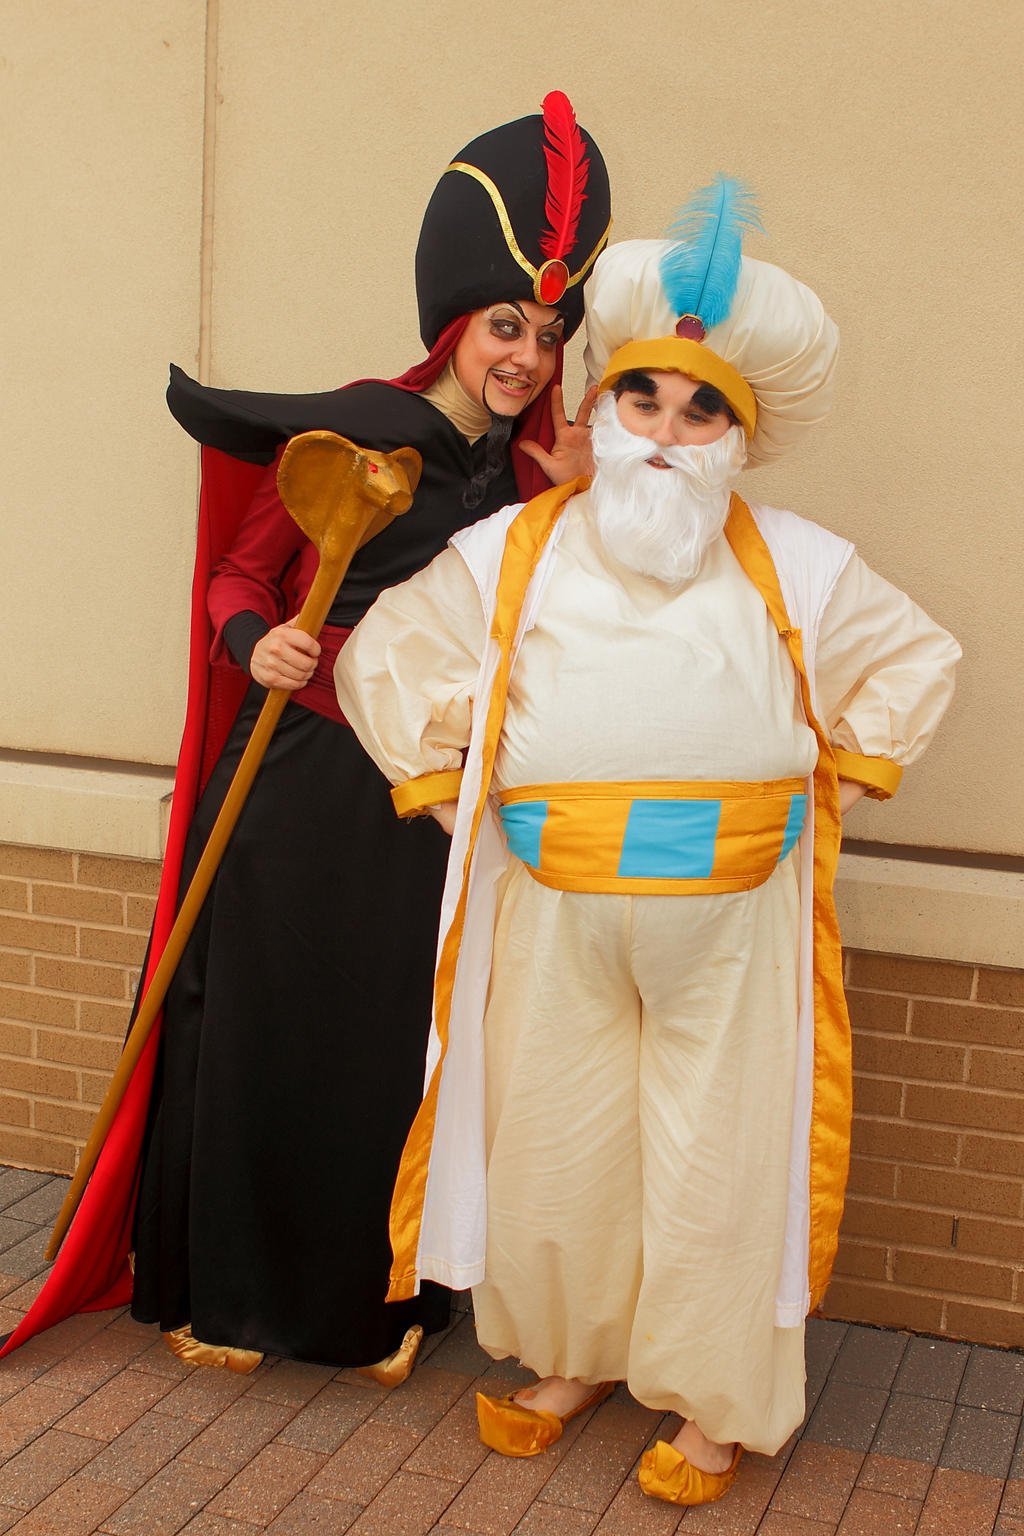 Jafar influences the Sultan